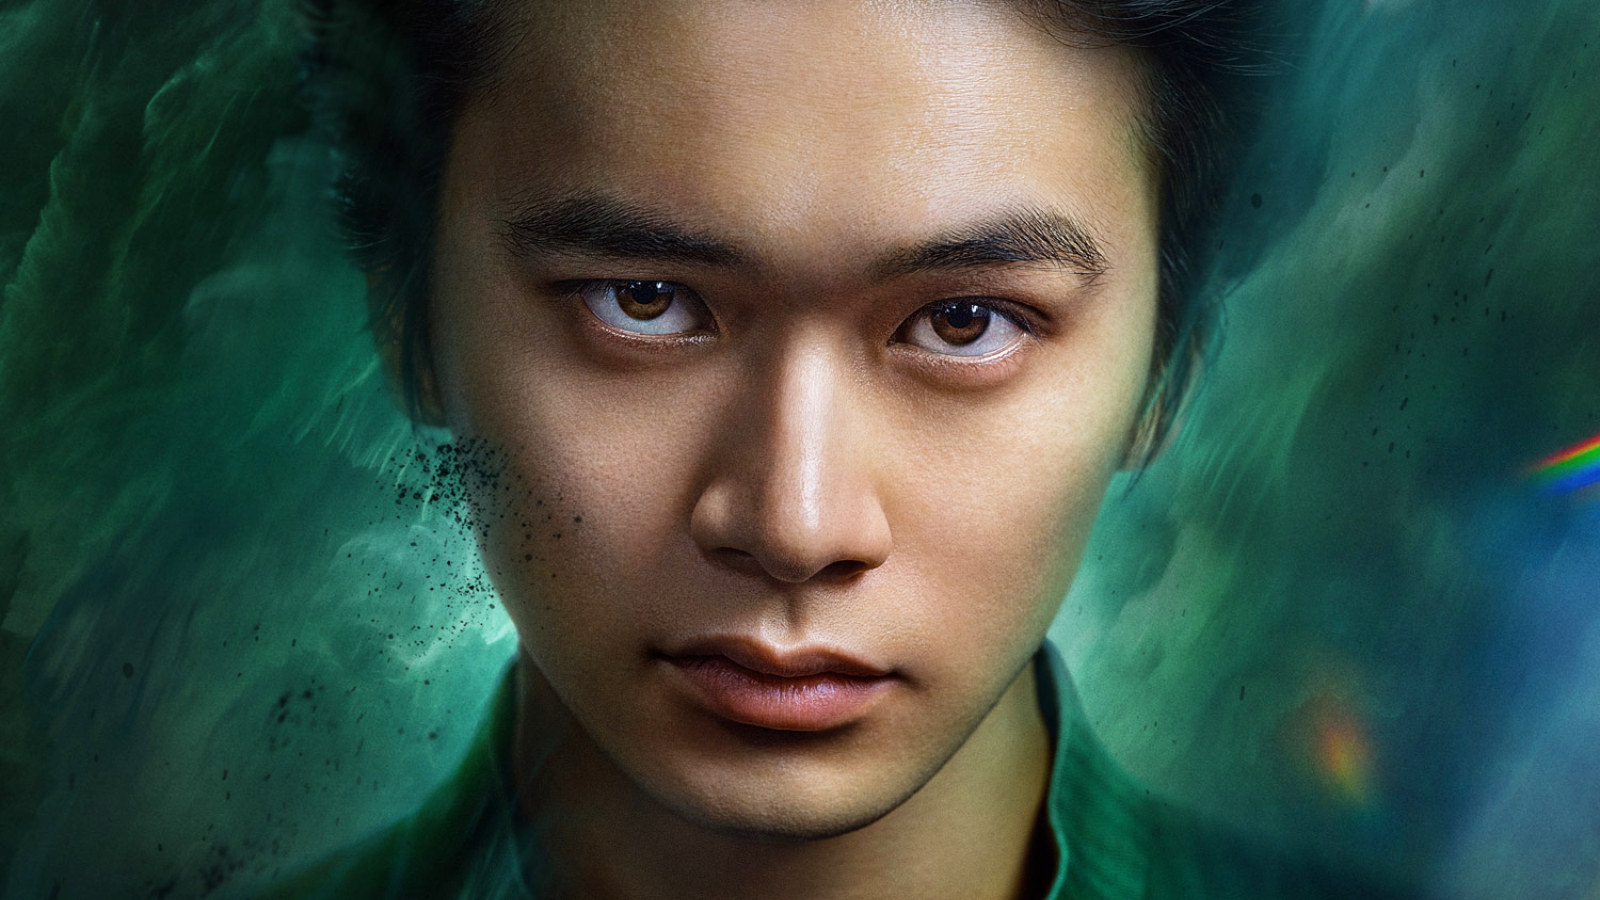 Netflix's Yu Yu Hakusho live-action series reveals its cast